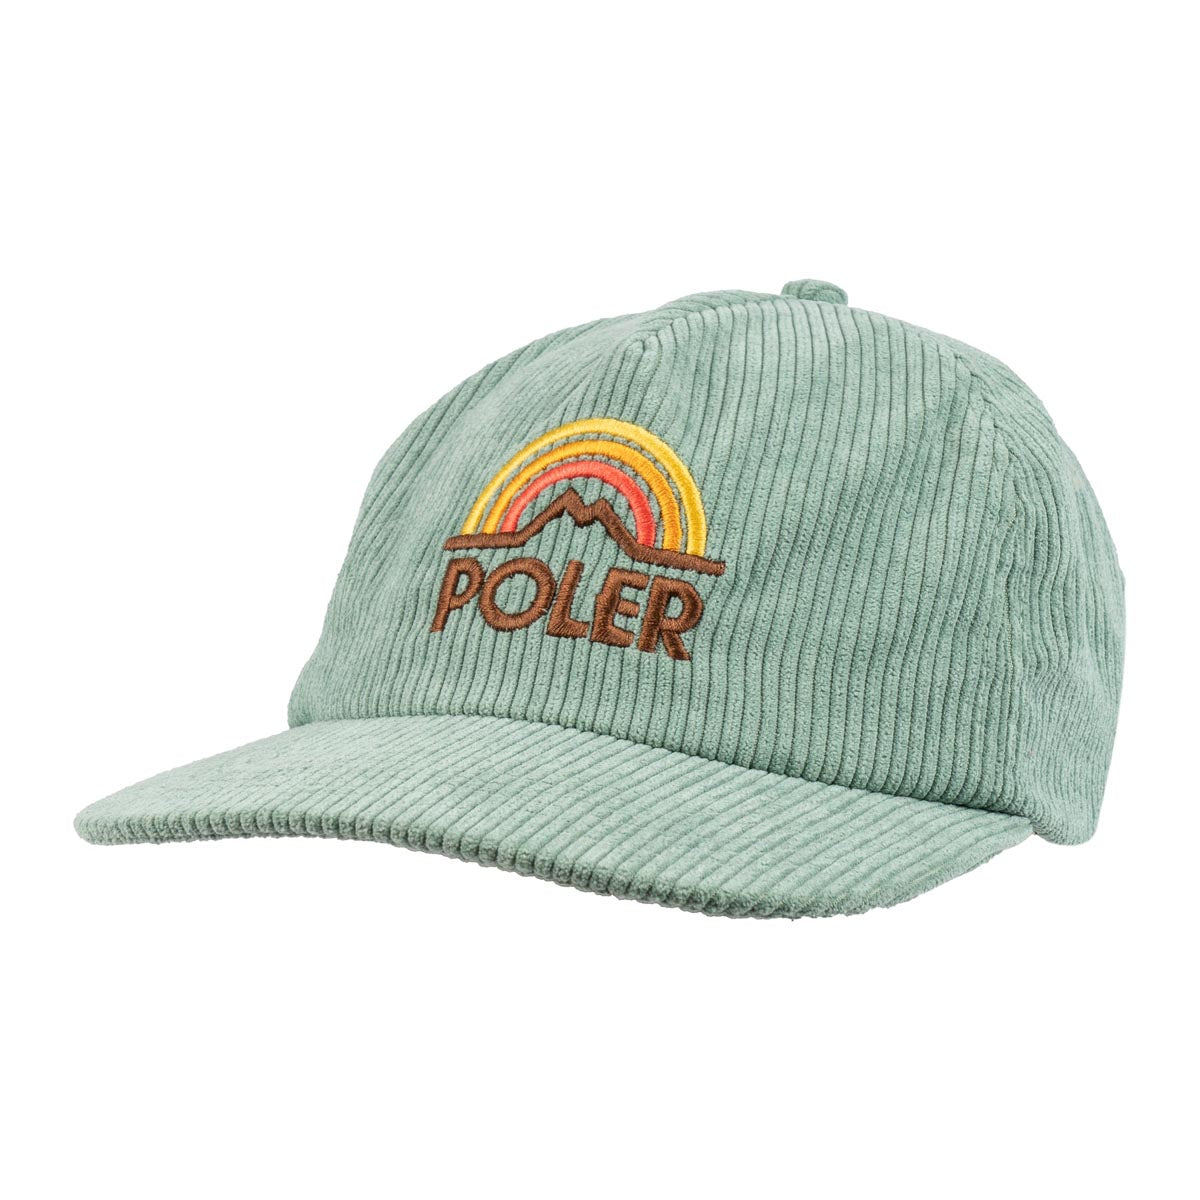 Poler Mtn Rainbow Hat - Forest Service Green image 1